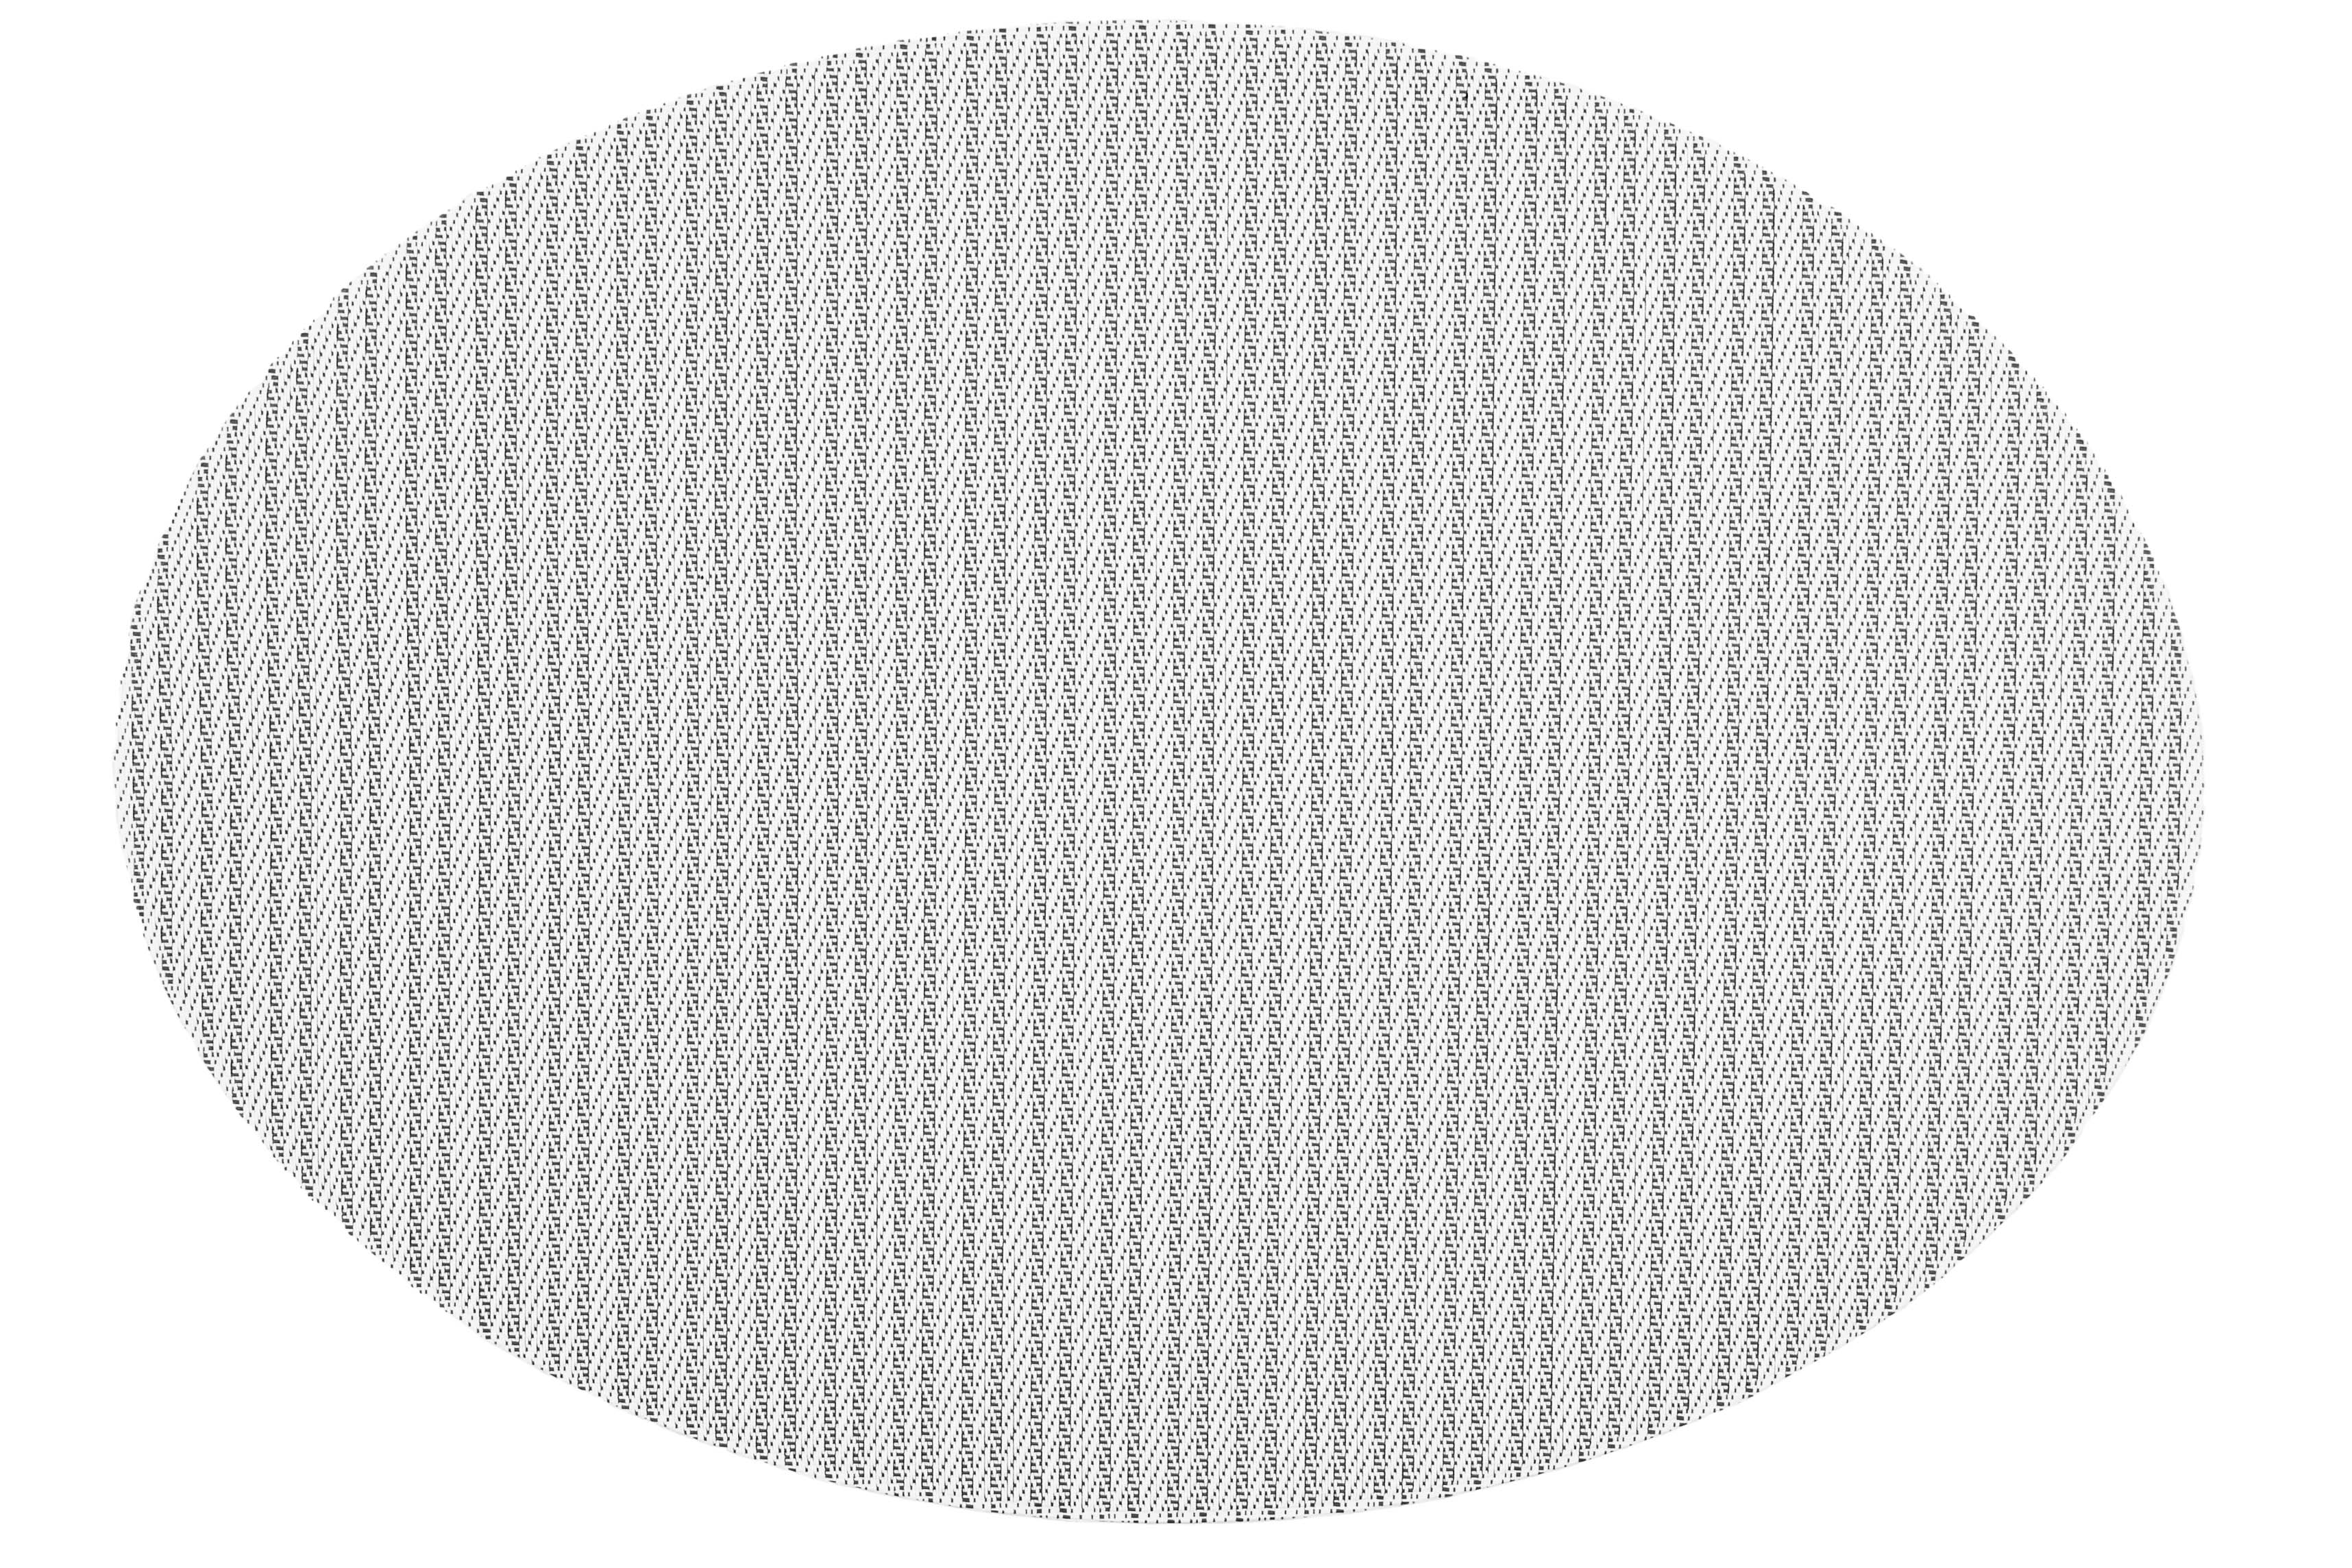 Placemat FALLON oval, 33x45cm, double stripe black